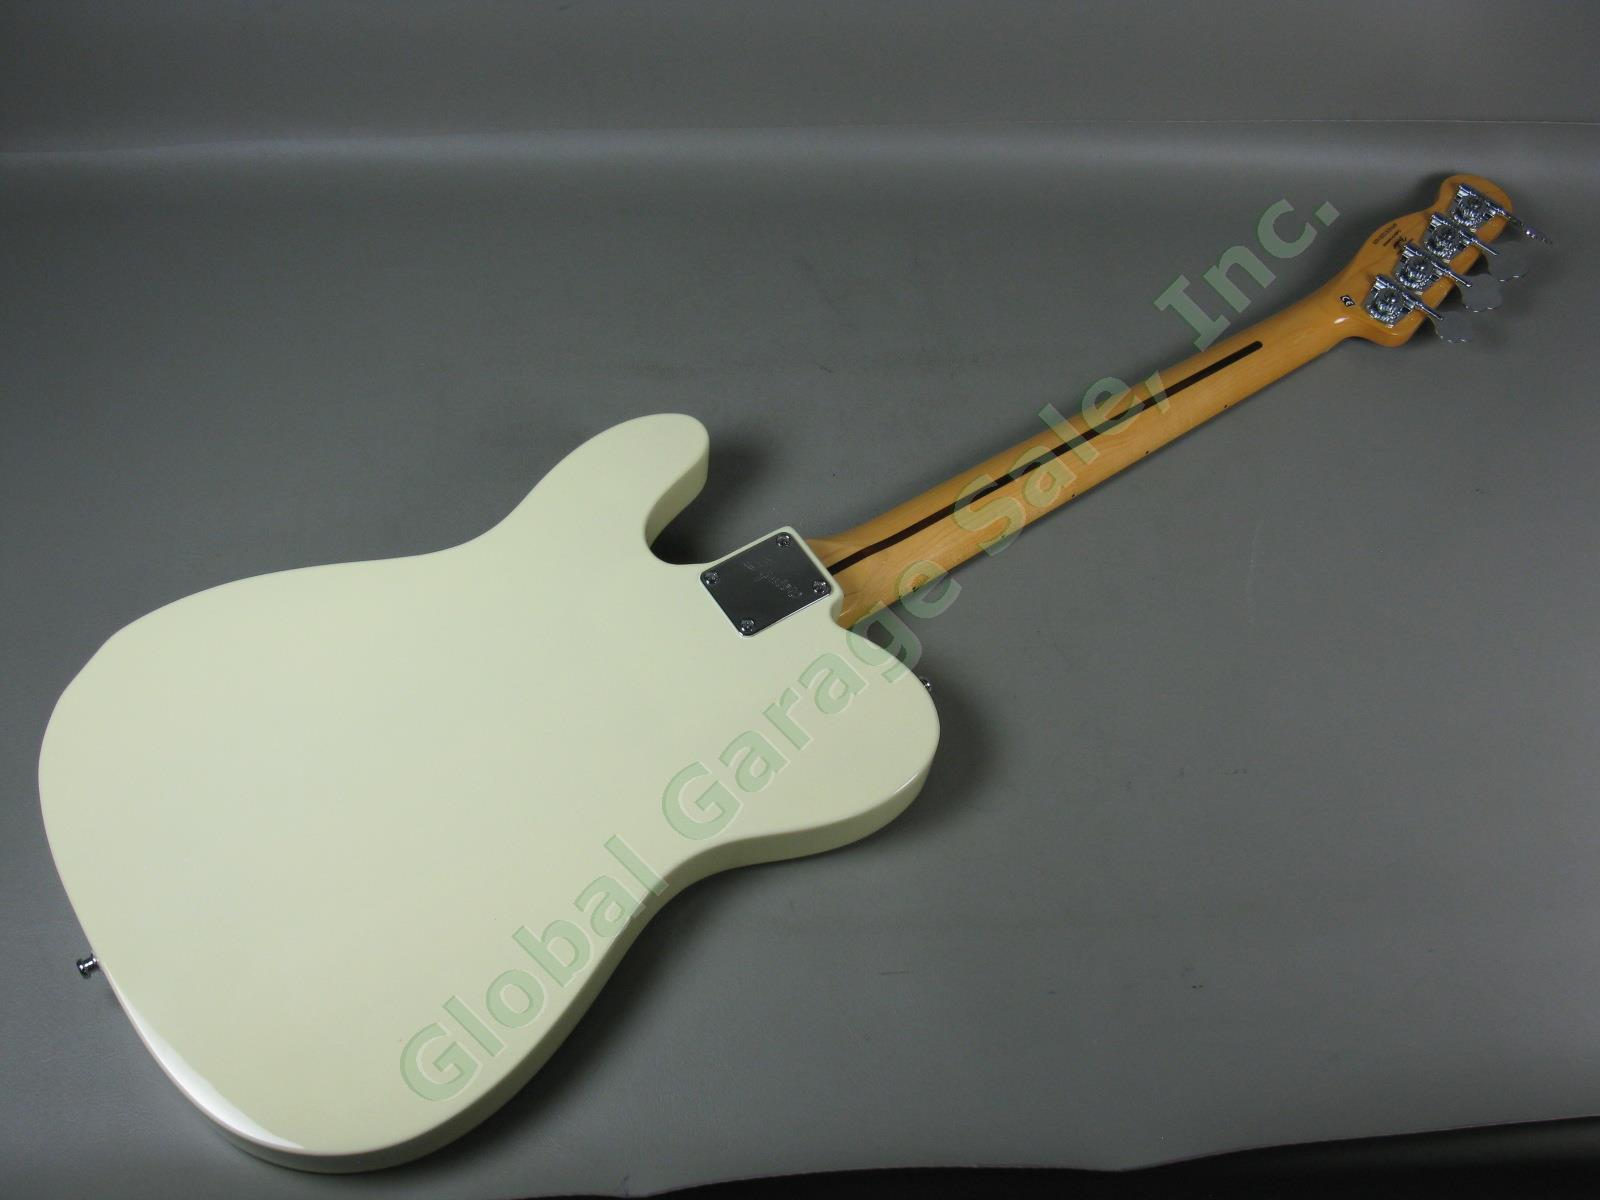 2012 Fender Squier Vtg Modified Telecaster Bass Special Guitar w/ Case Near Mint 10